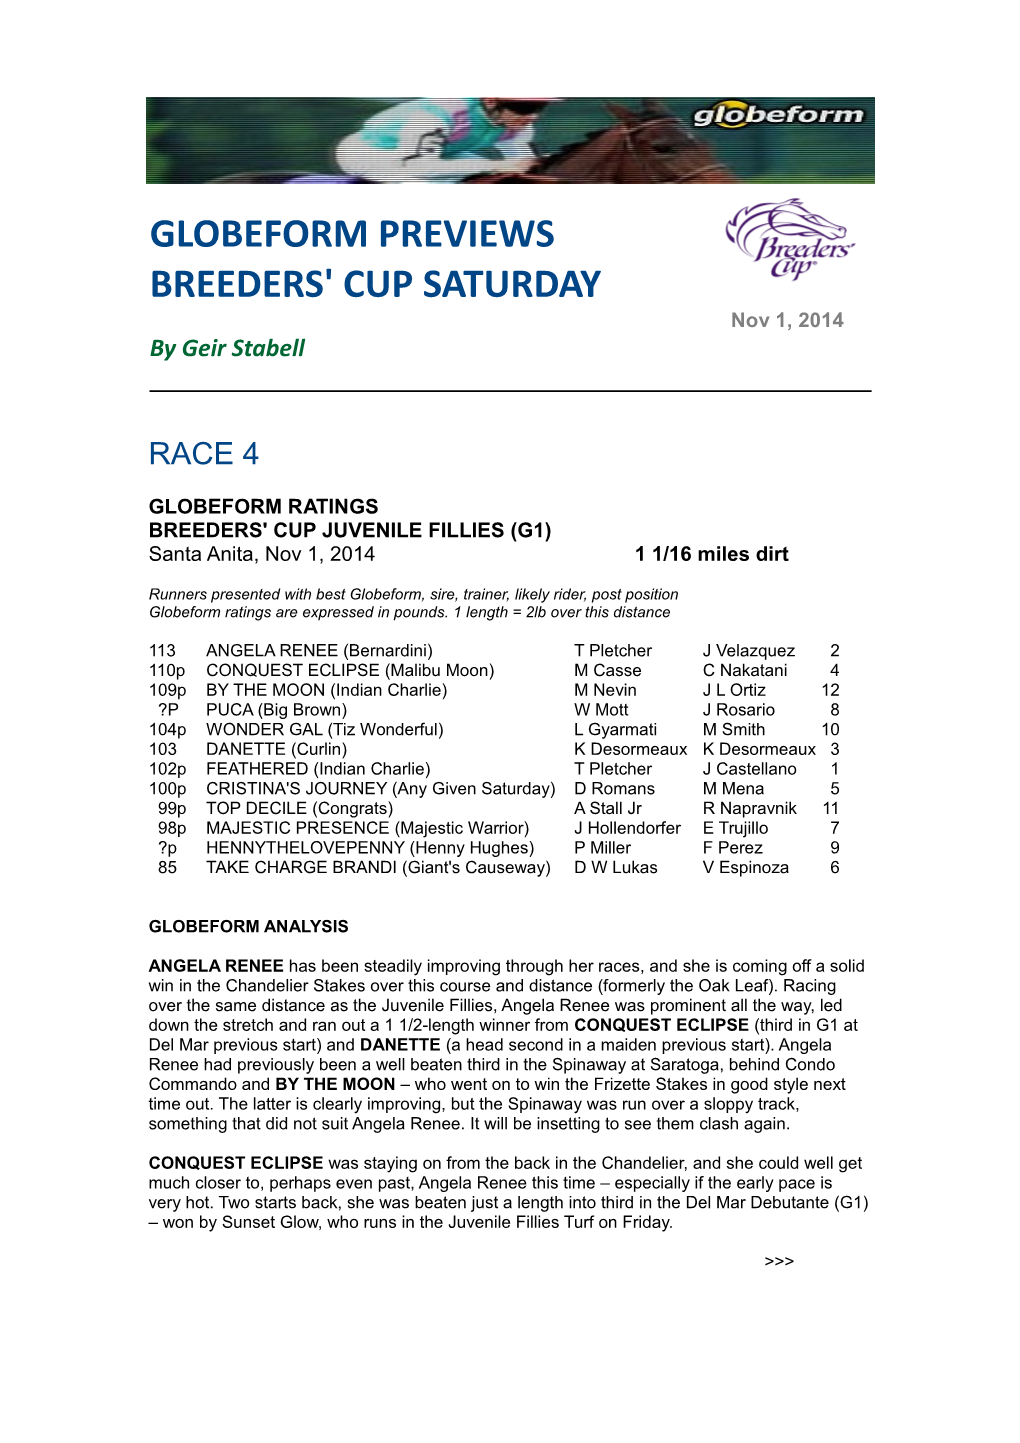 GLOBEFORM PREVIEWS BREEDERS' CUP SATURDAY Nov 1, 2014 by Geir Stabell